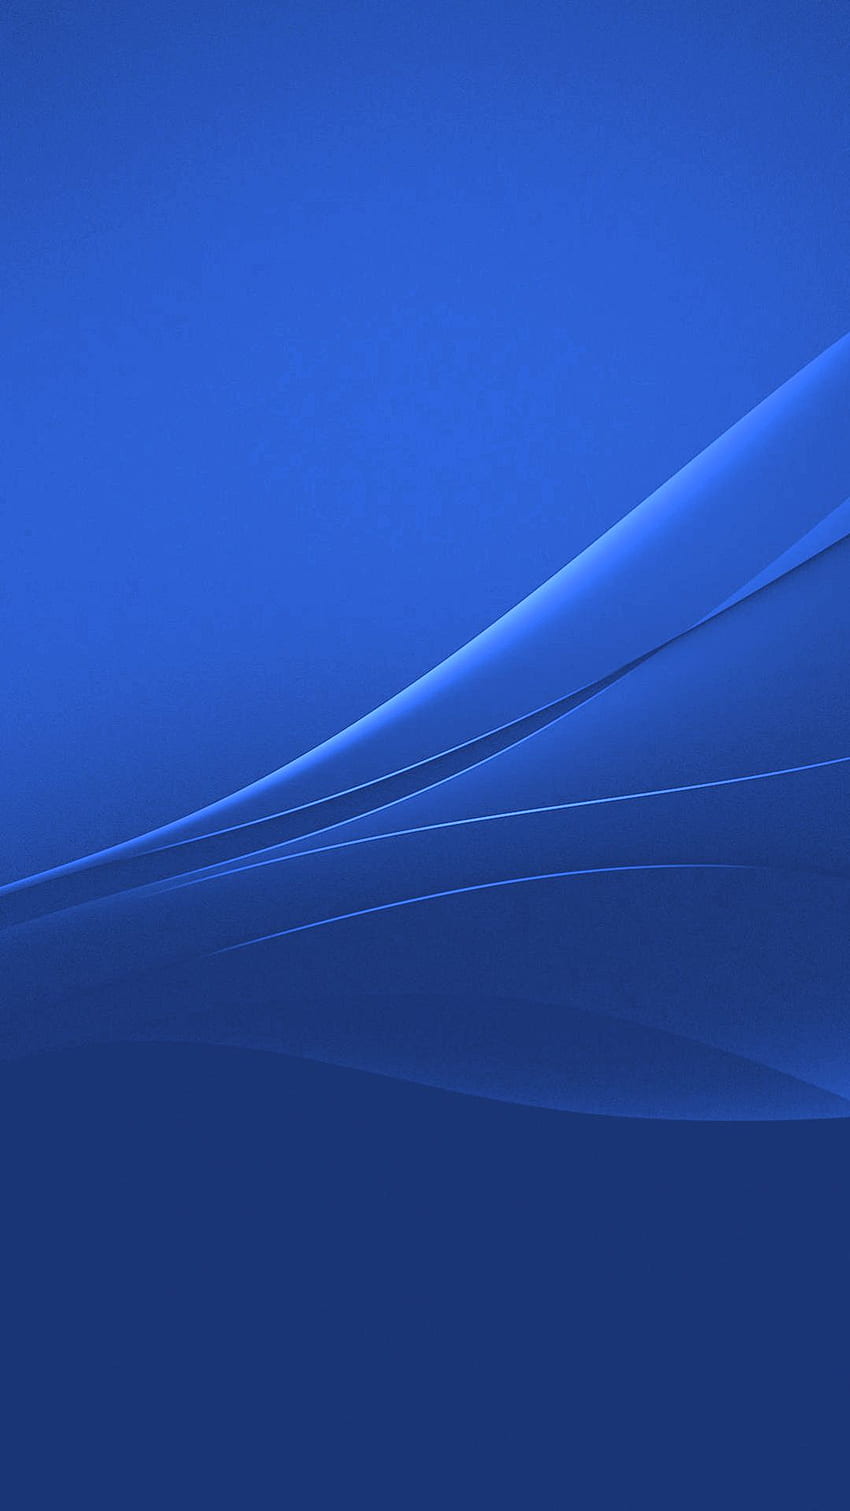 Xperia . Xperia , Sony Xperia dan Sony Xperia Z3, Sony Blue wallpaper ponsel HD